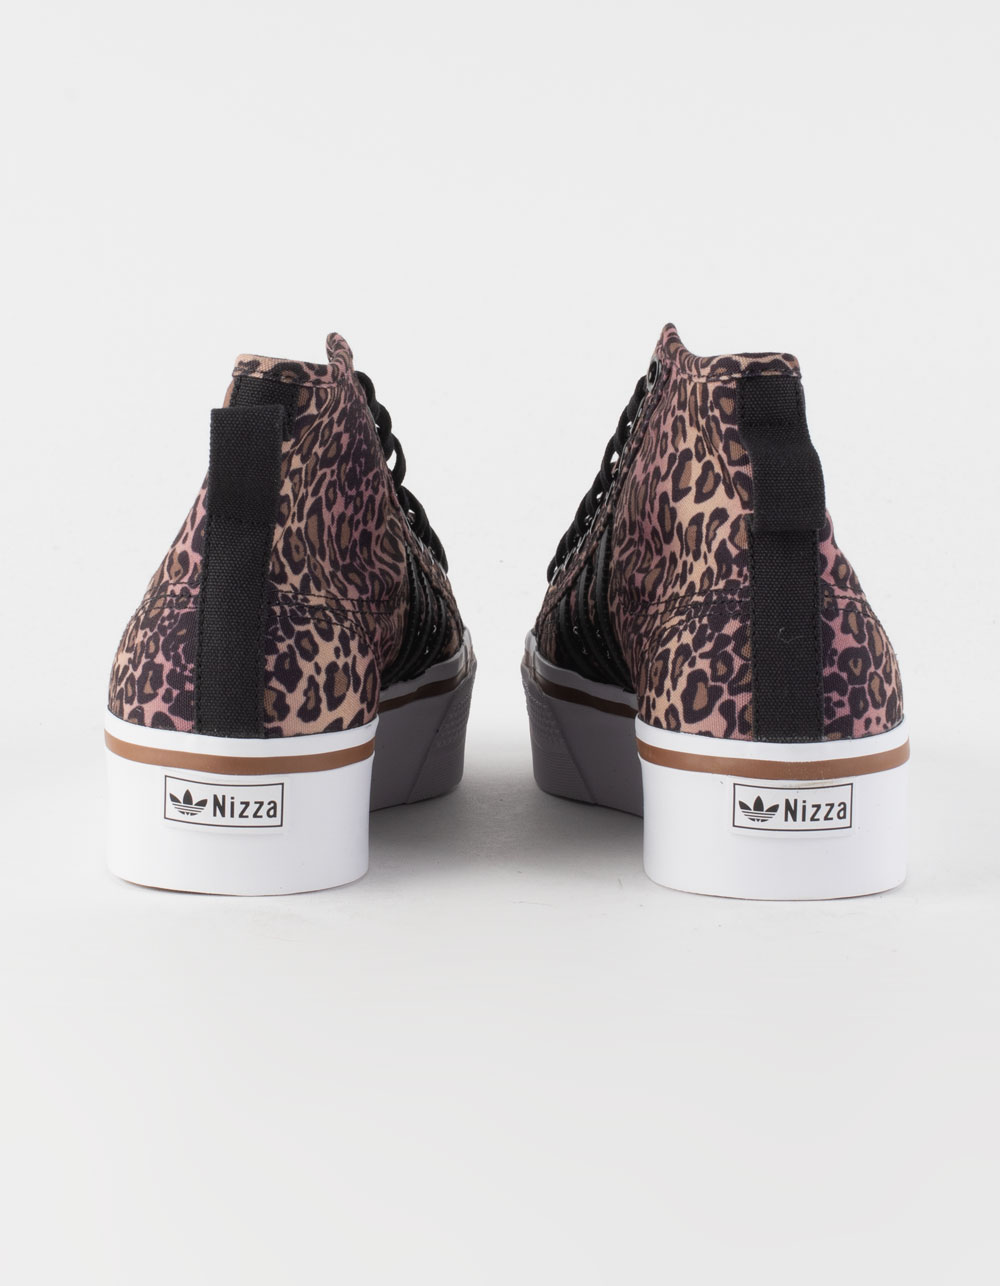 ADIDAS Nizza Platform Mid Womens Shoes - LEOPARD BROWN | Tillys